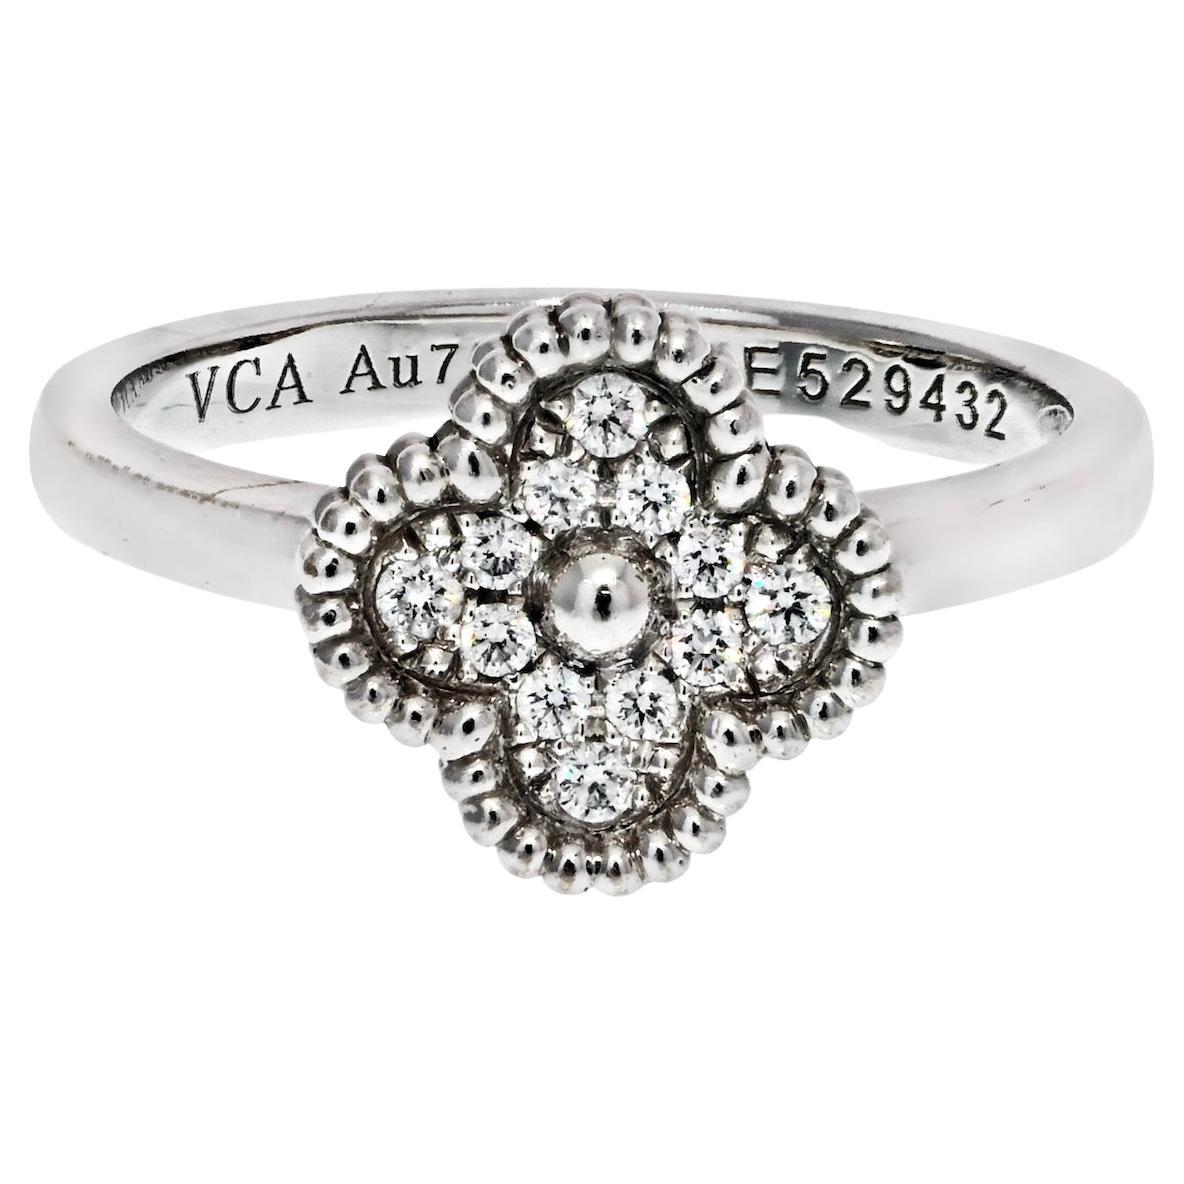 Van Cleef & Arpels 18K White Gold Sweet Alhambra Diamond Ring